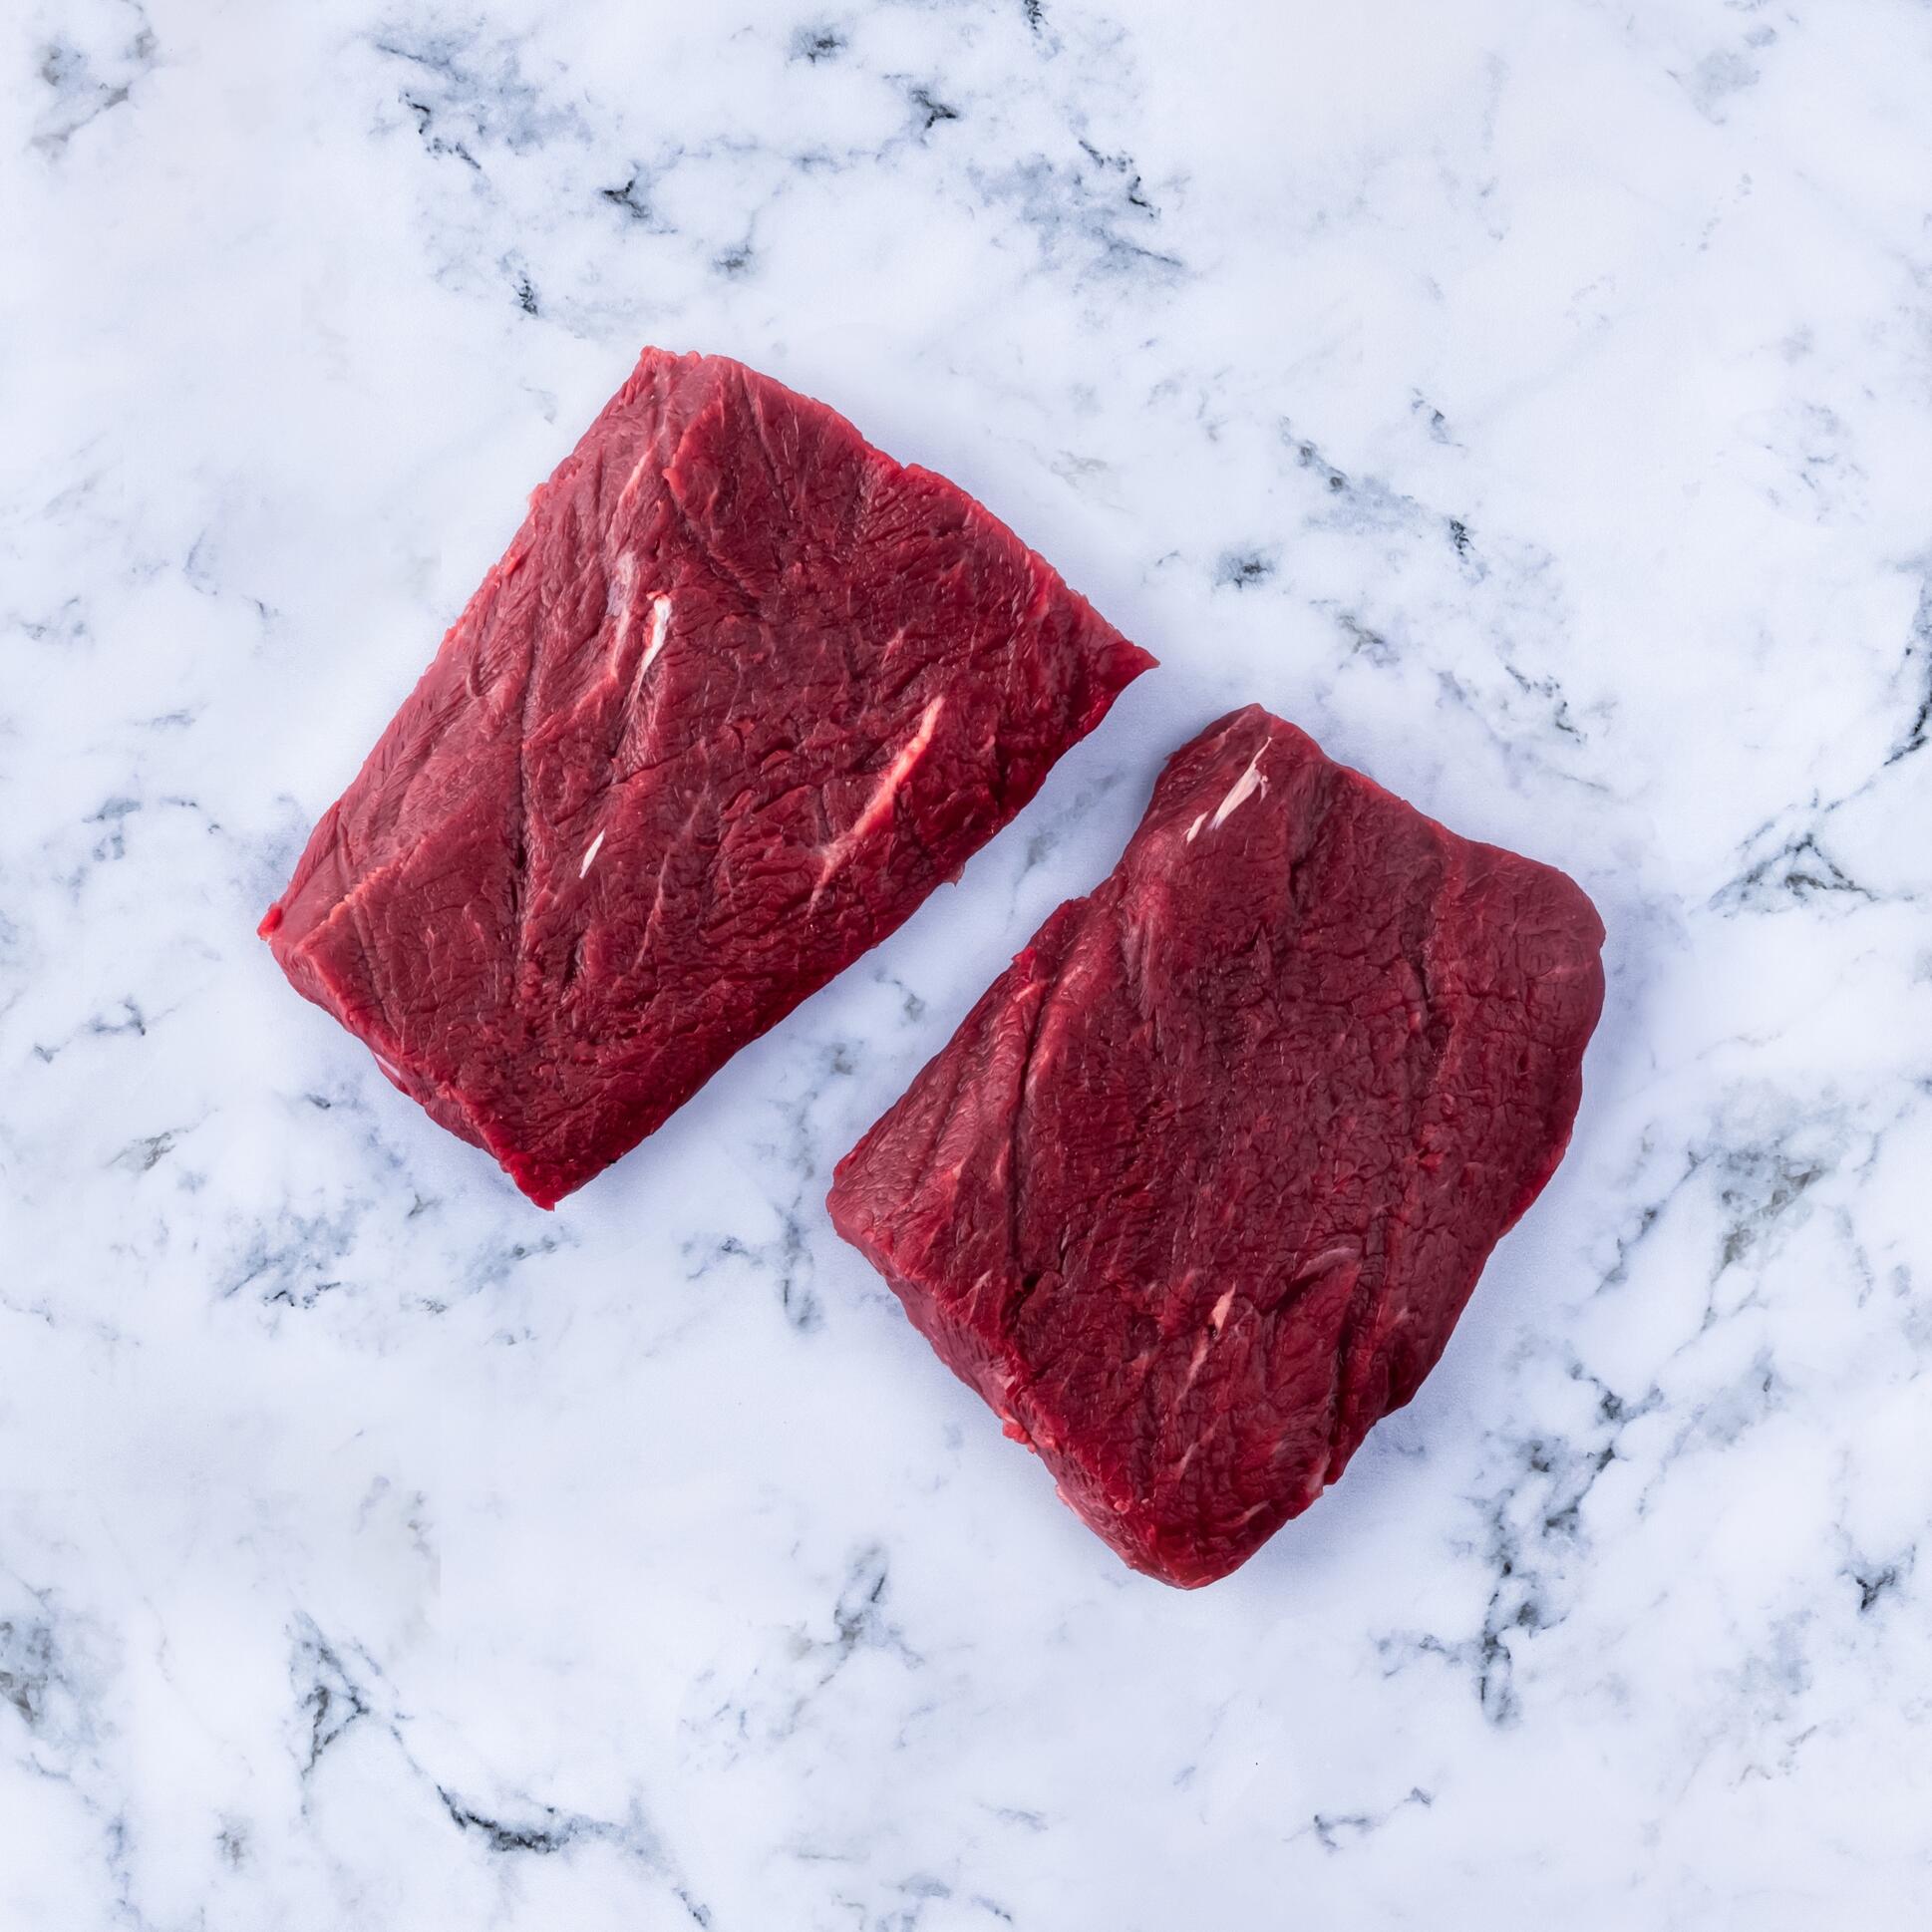 Carnivore Flat Iron Steak 2 x 227g